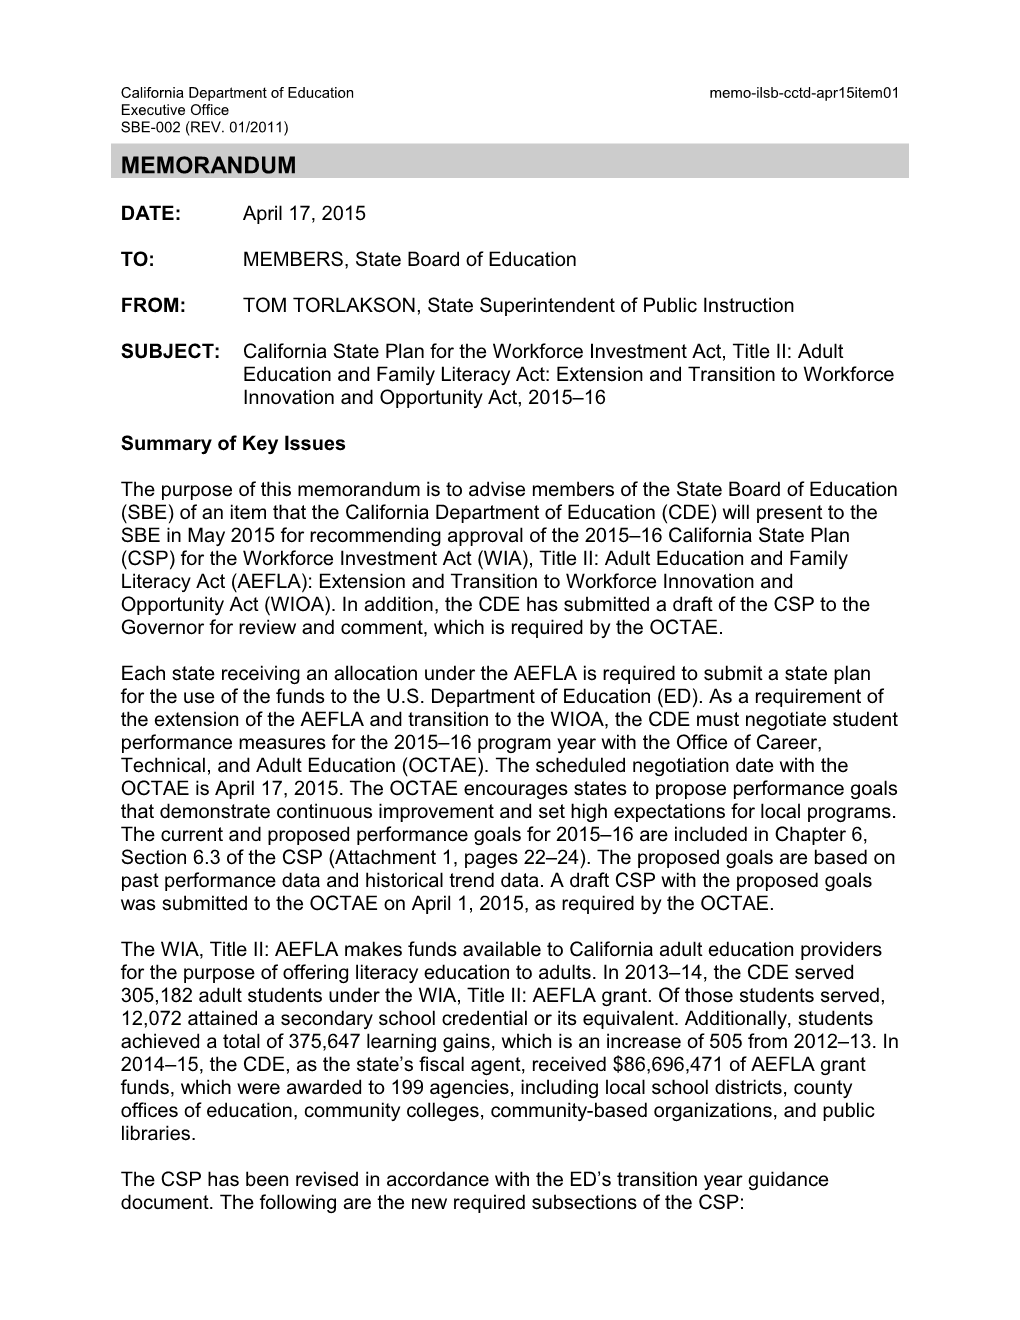 April 2015 ILSB CCTD Item 01 - Information Memorandum (CA State Board of Education)